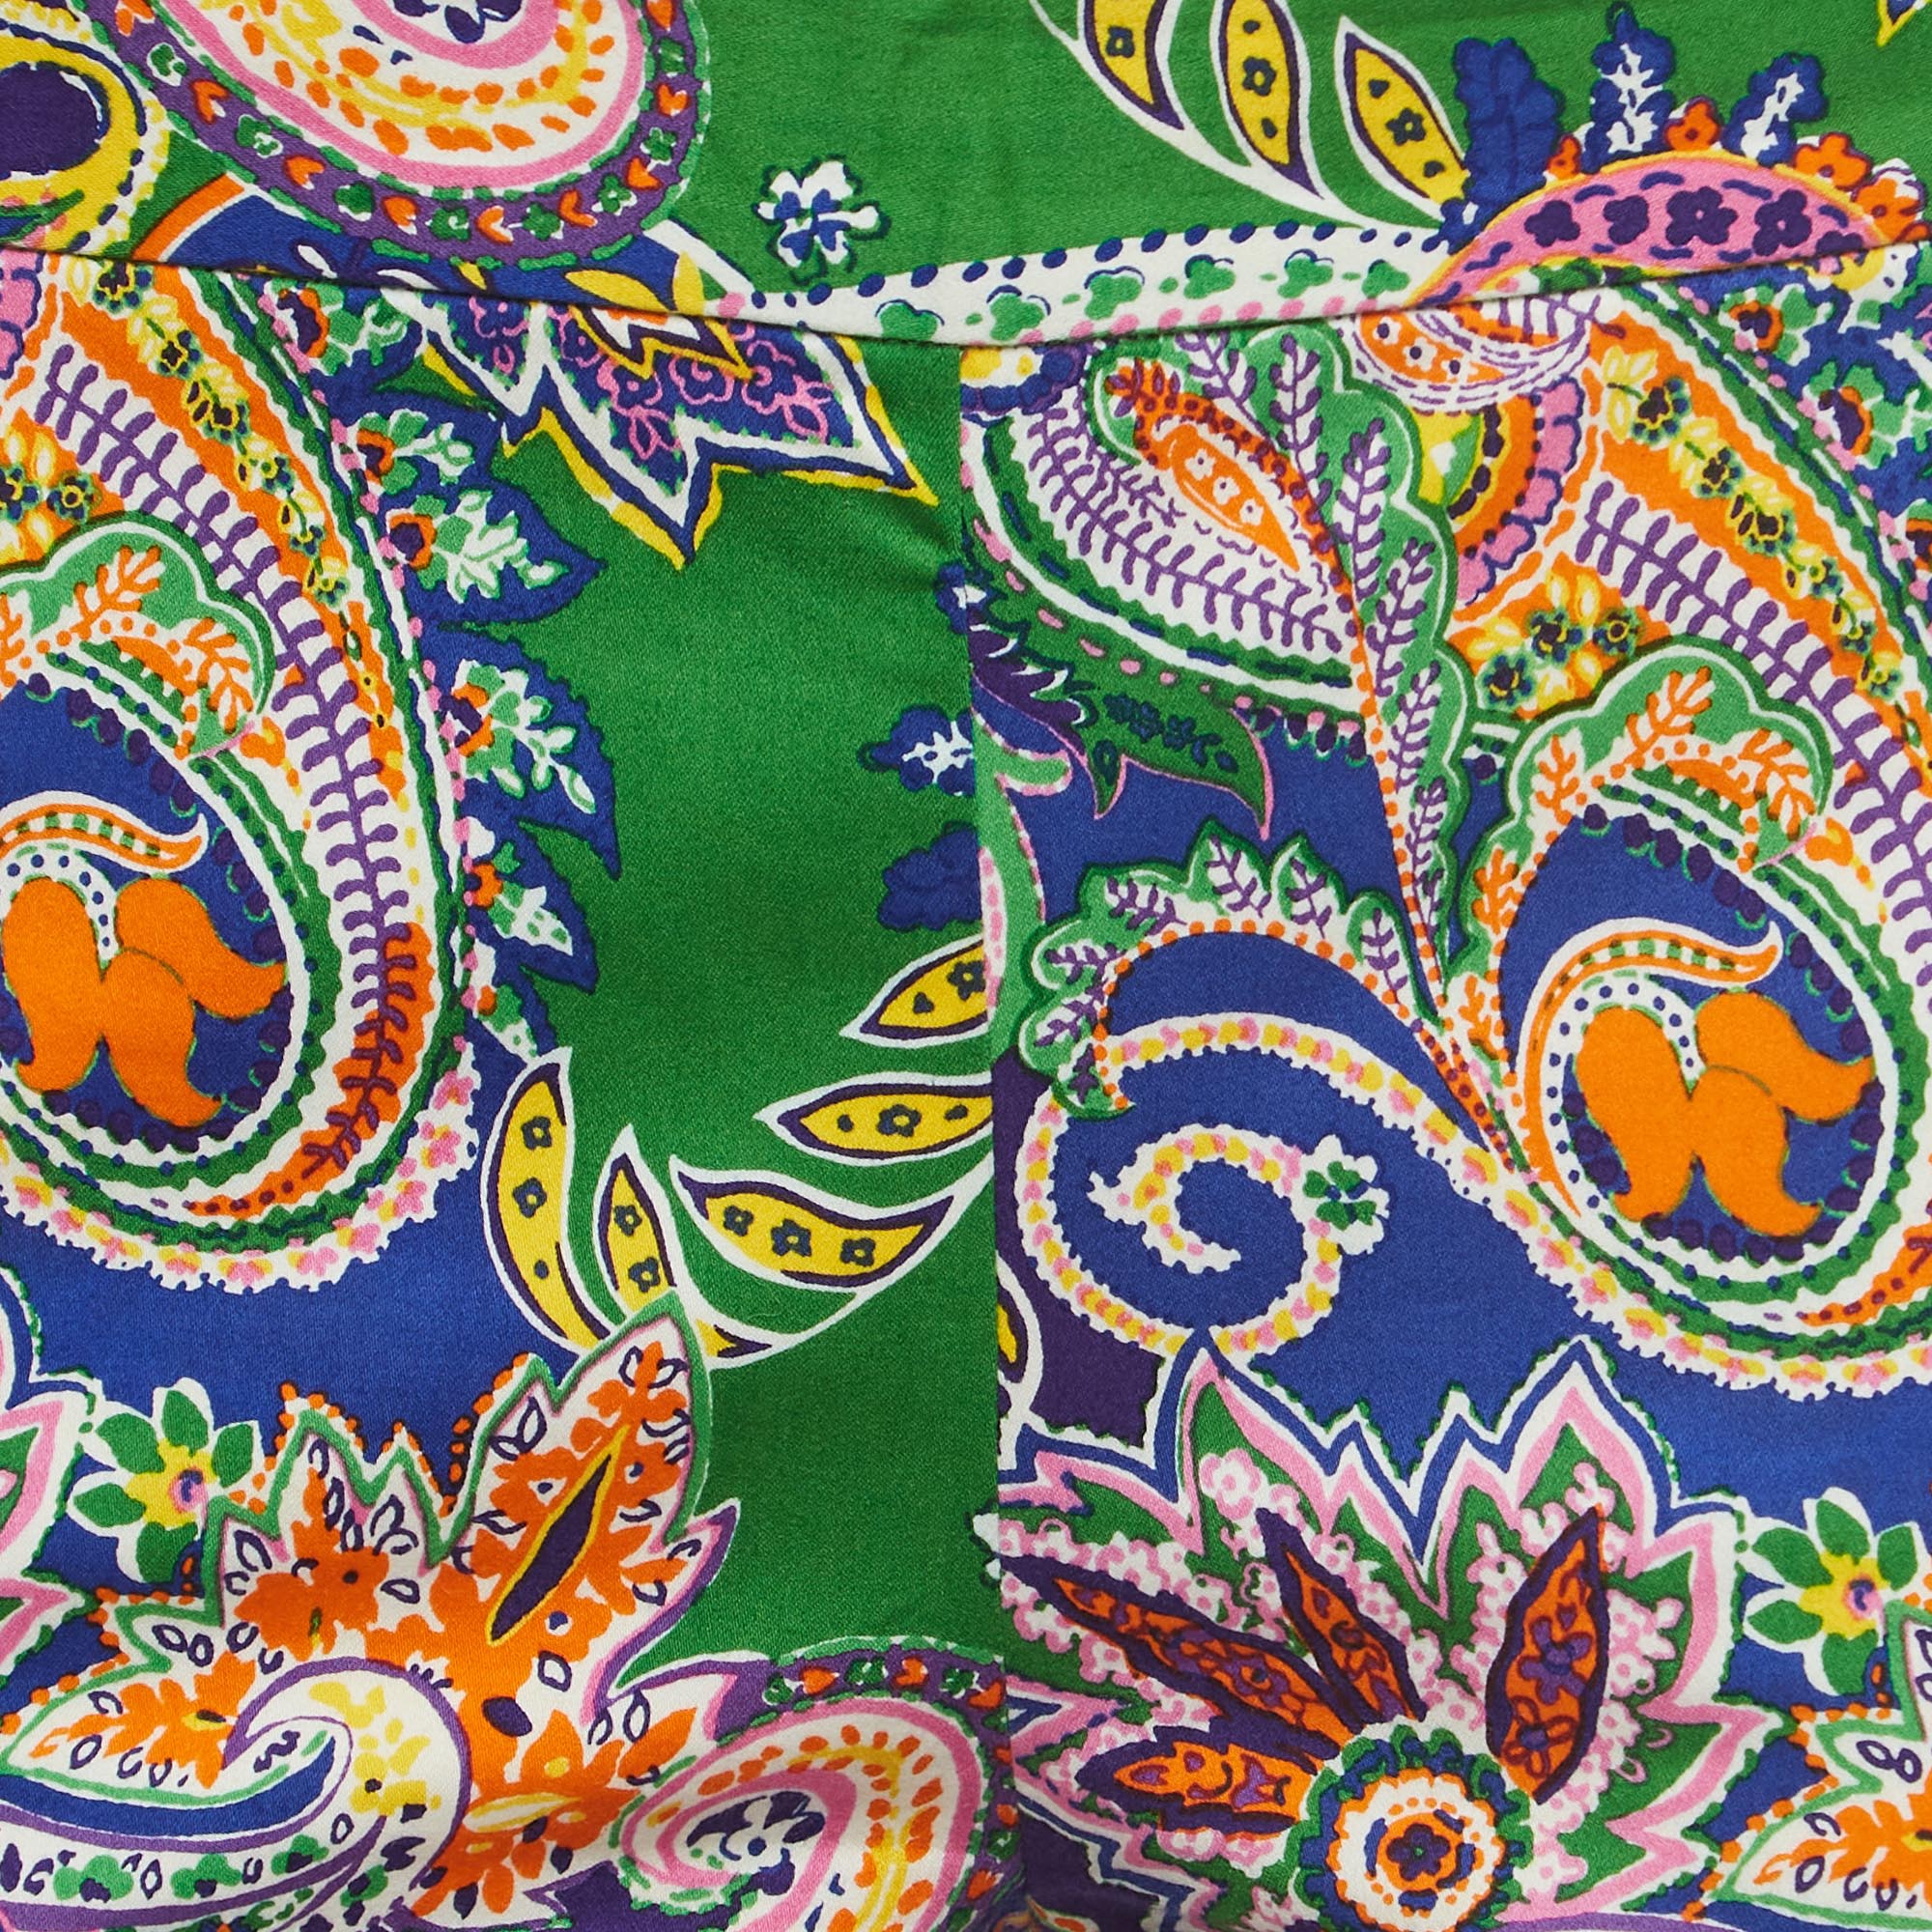 Ralph Lauren Green/Multicolor Paisley Printed Stretch Cotton Pants S